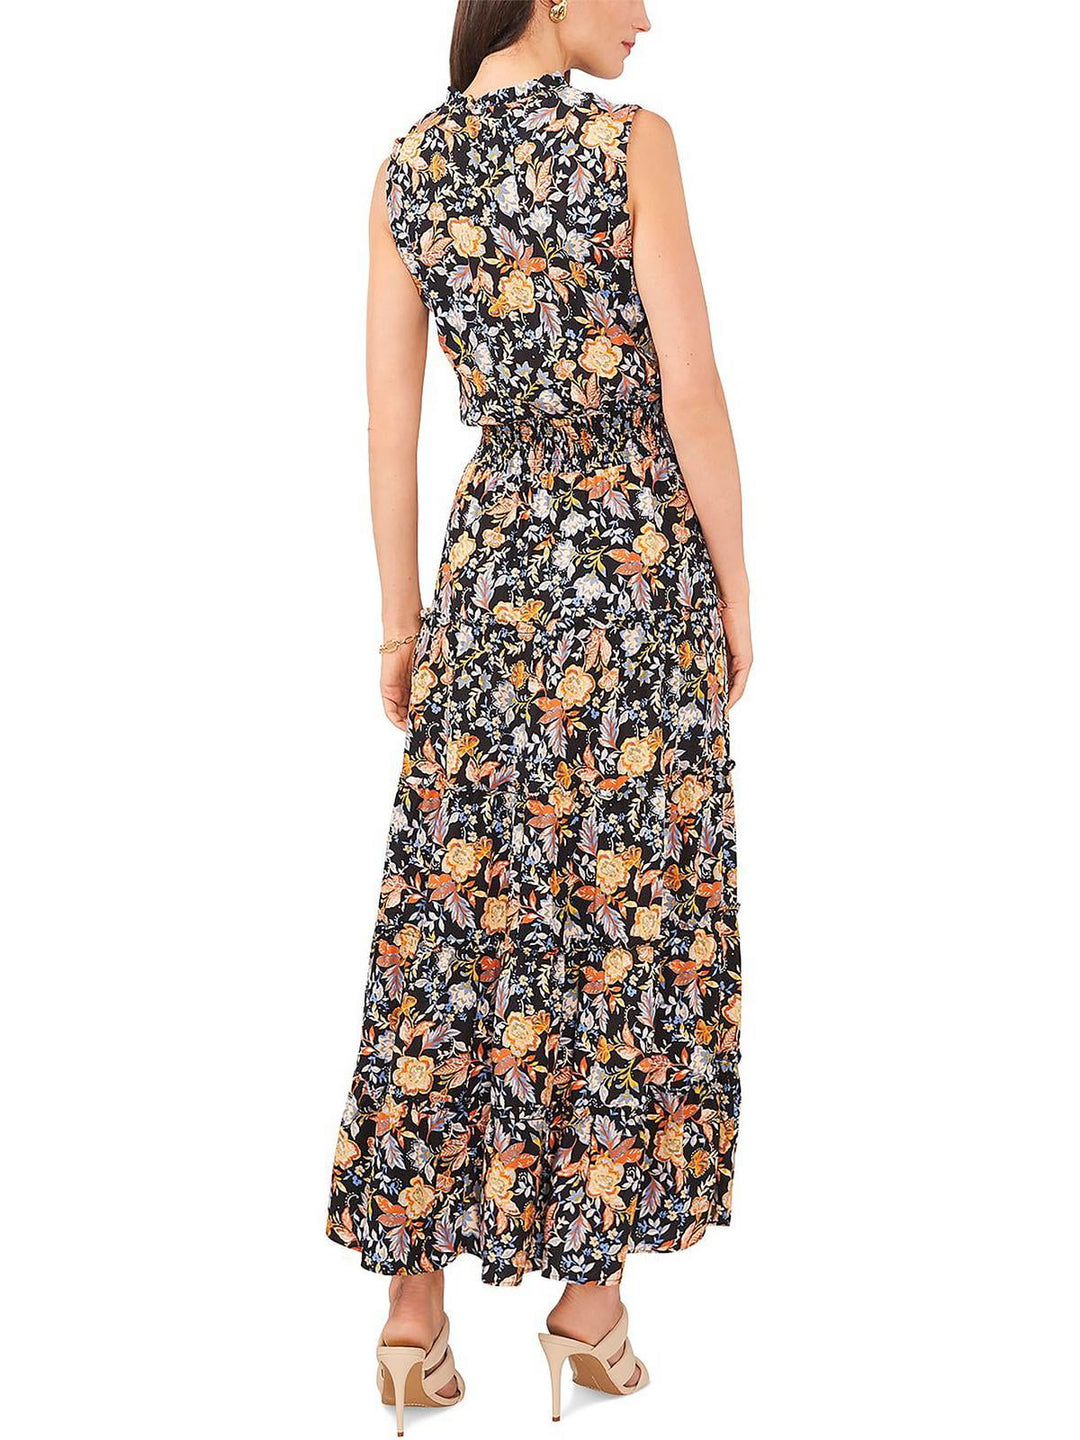 MSK Women's Floral Print Smocked Waist Tiered Maxi Dress Black Size X-Large